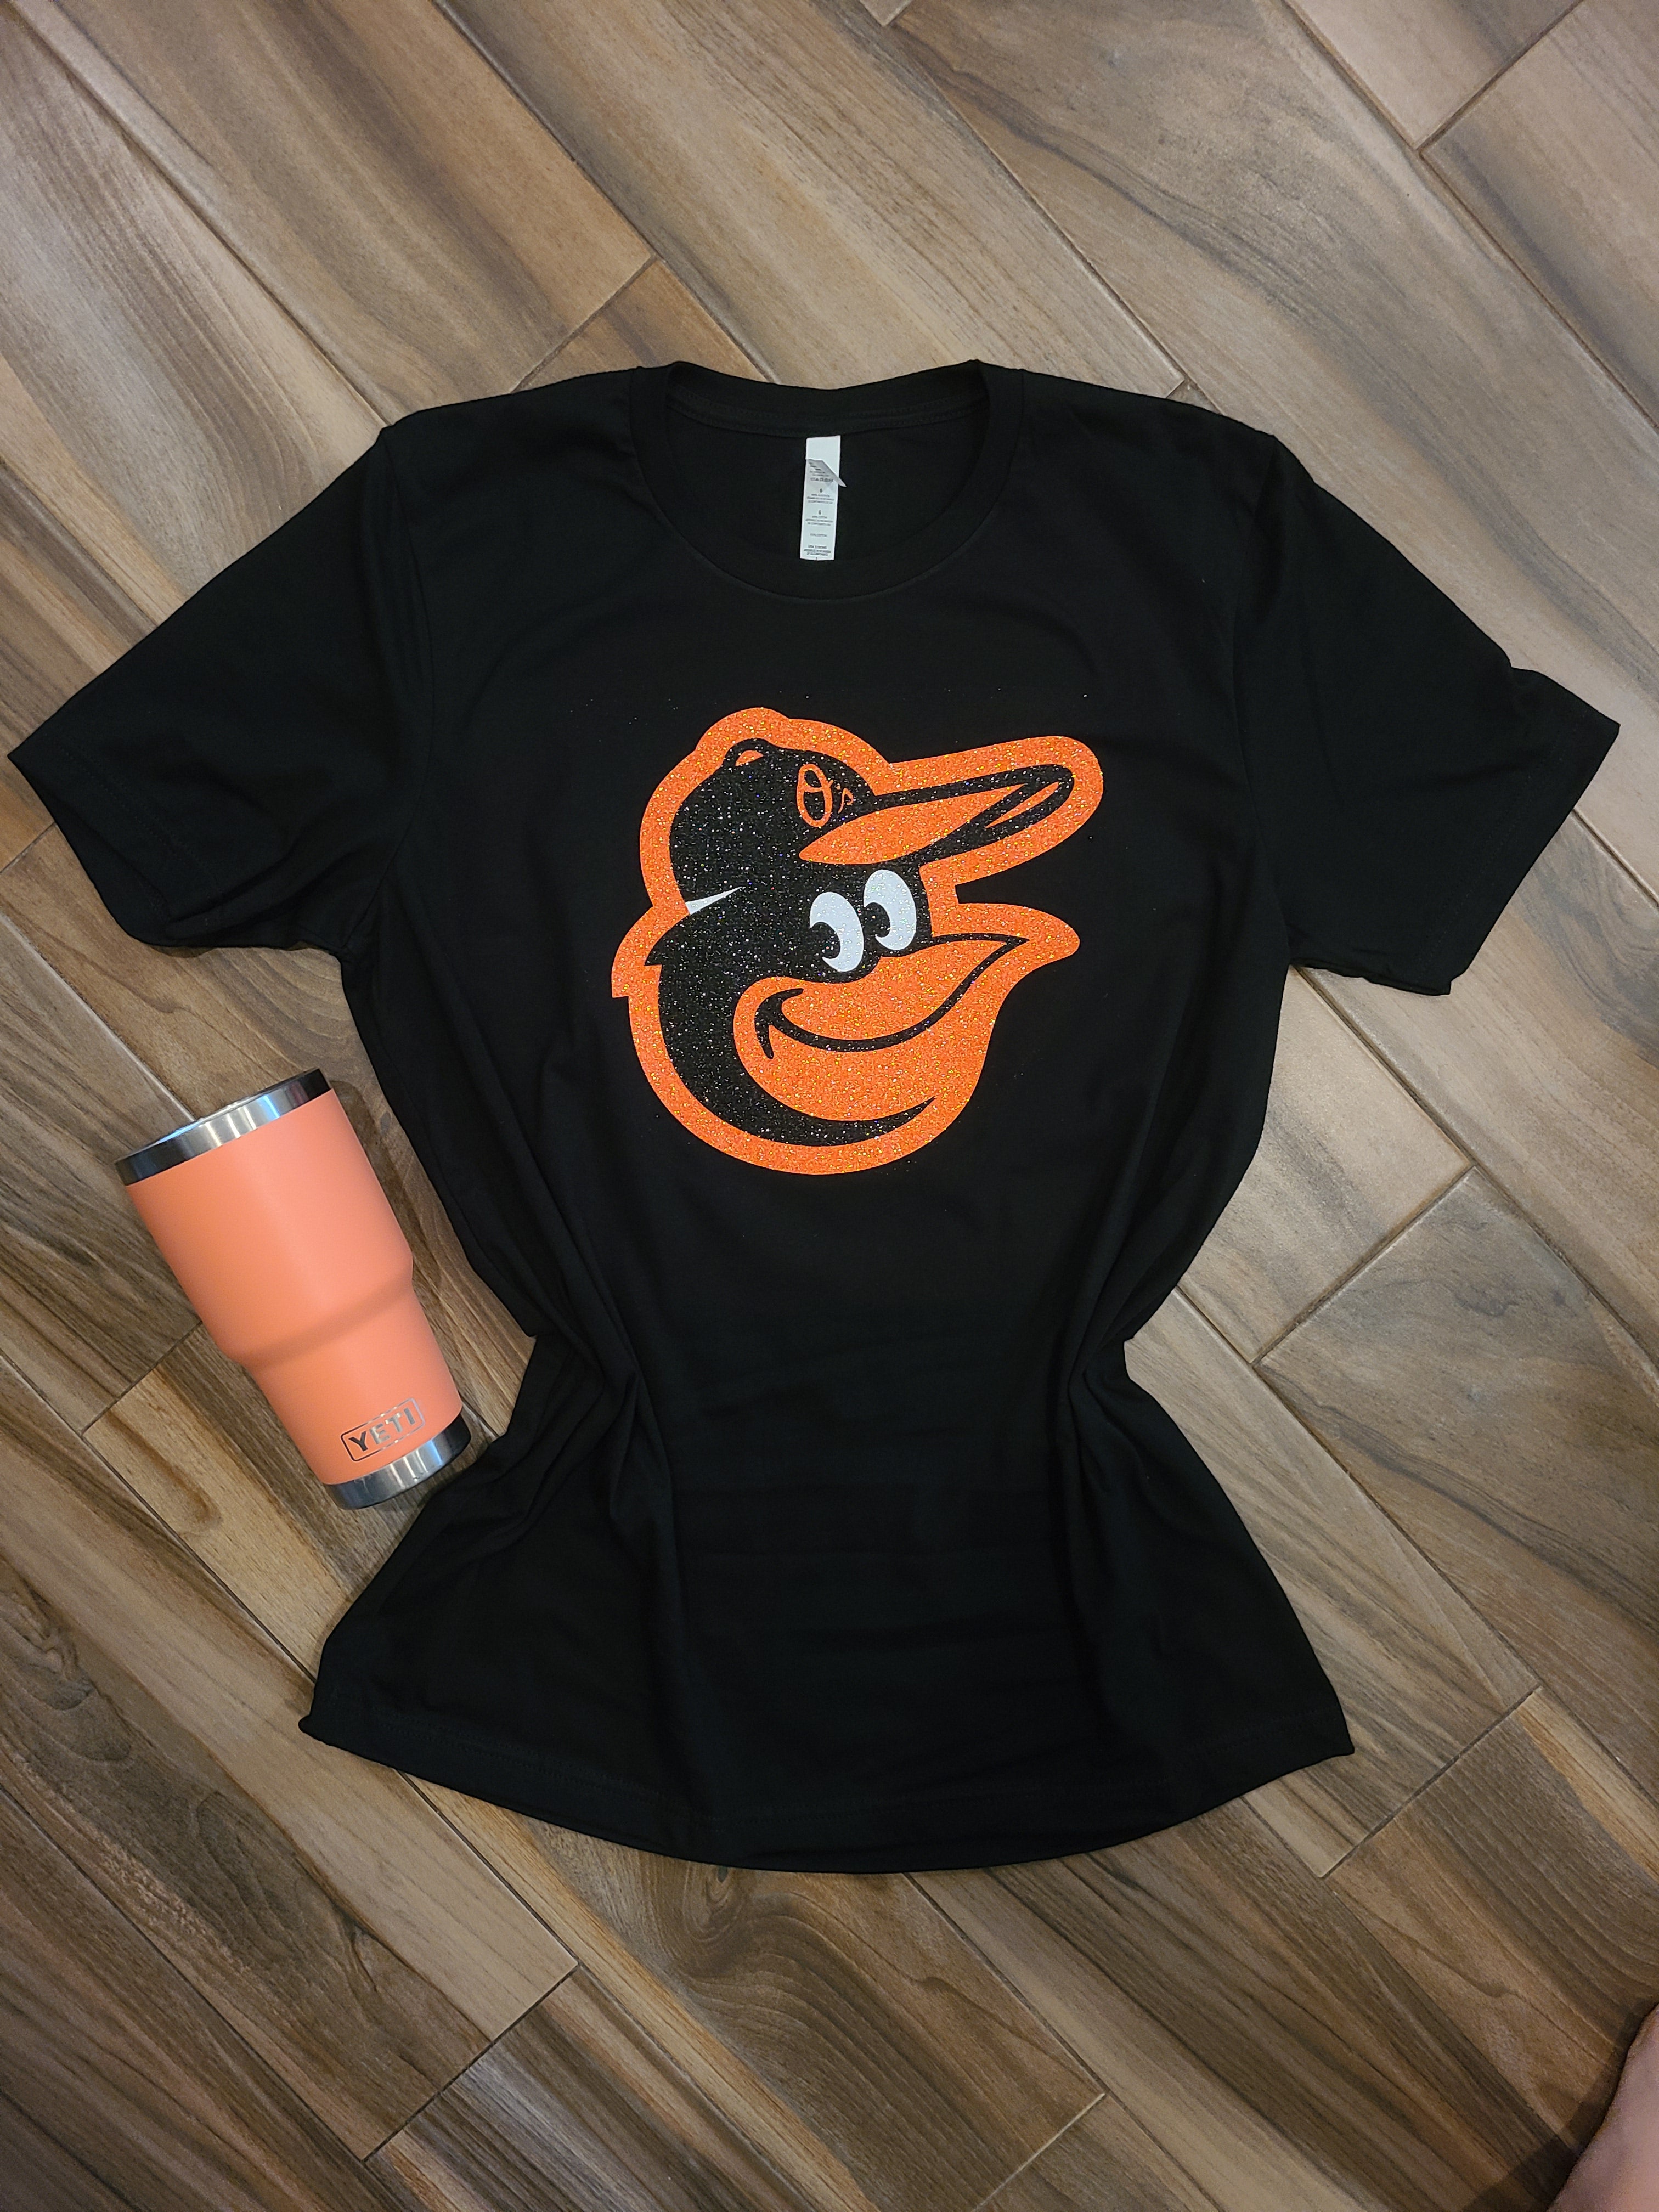 Baltimore Orioles T-Shirt, Orioles Shirts, Orioles Baseball Shirts